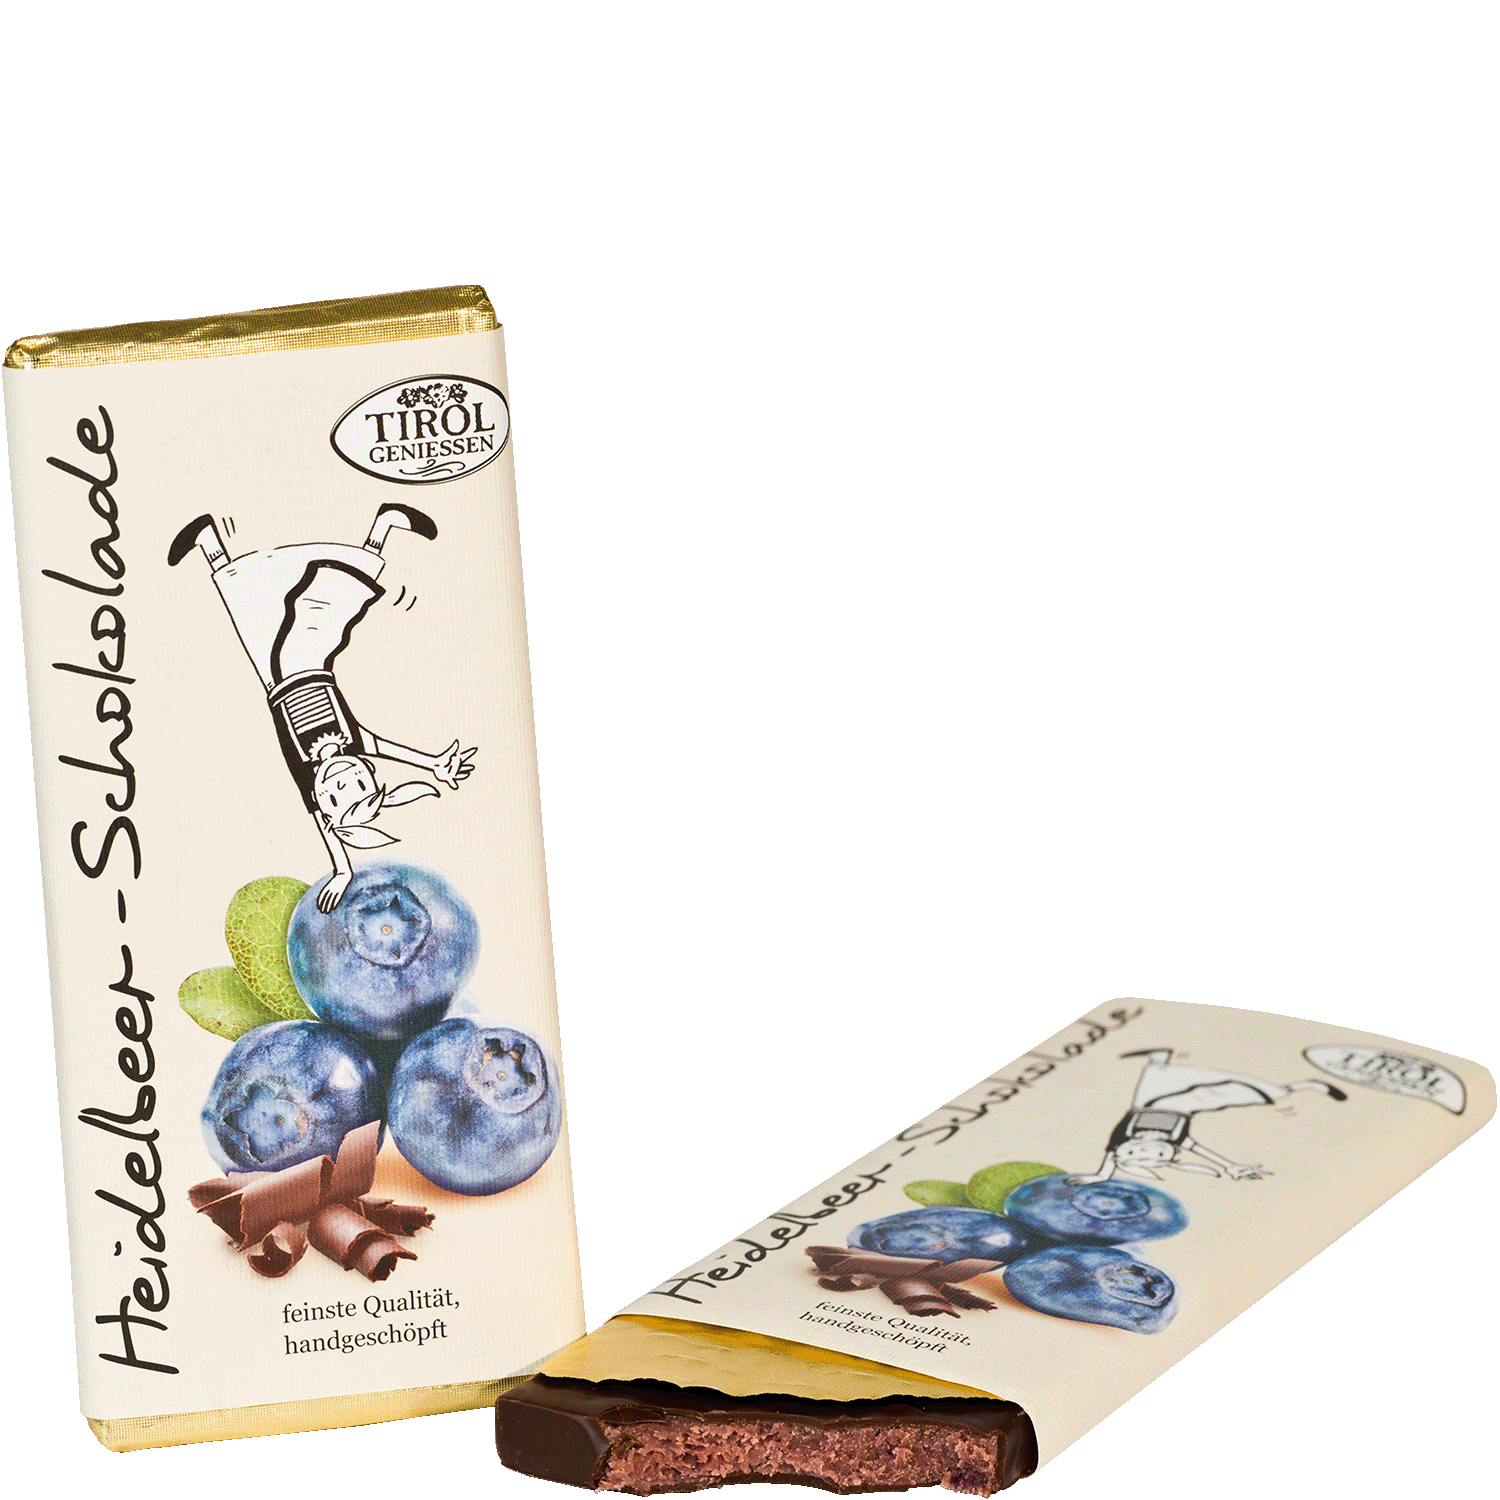 Bilberry Chocolate from Austria from Tirol Geniessen